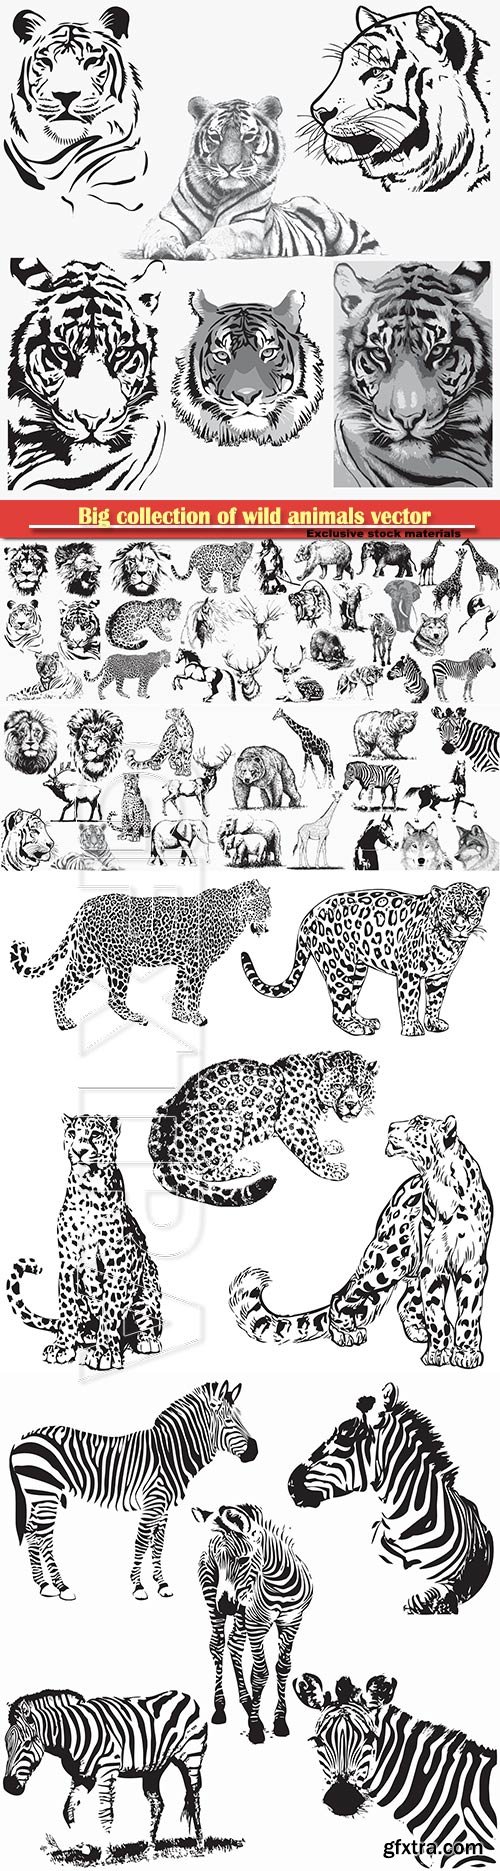 Big collection of wild animals vector illustration